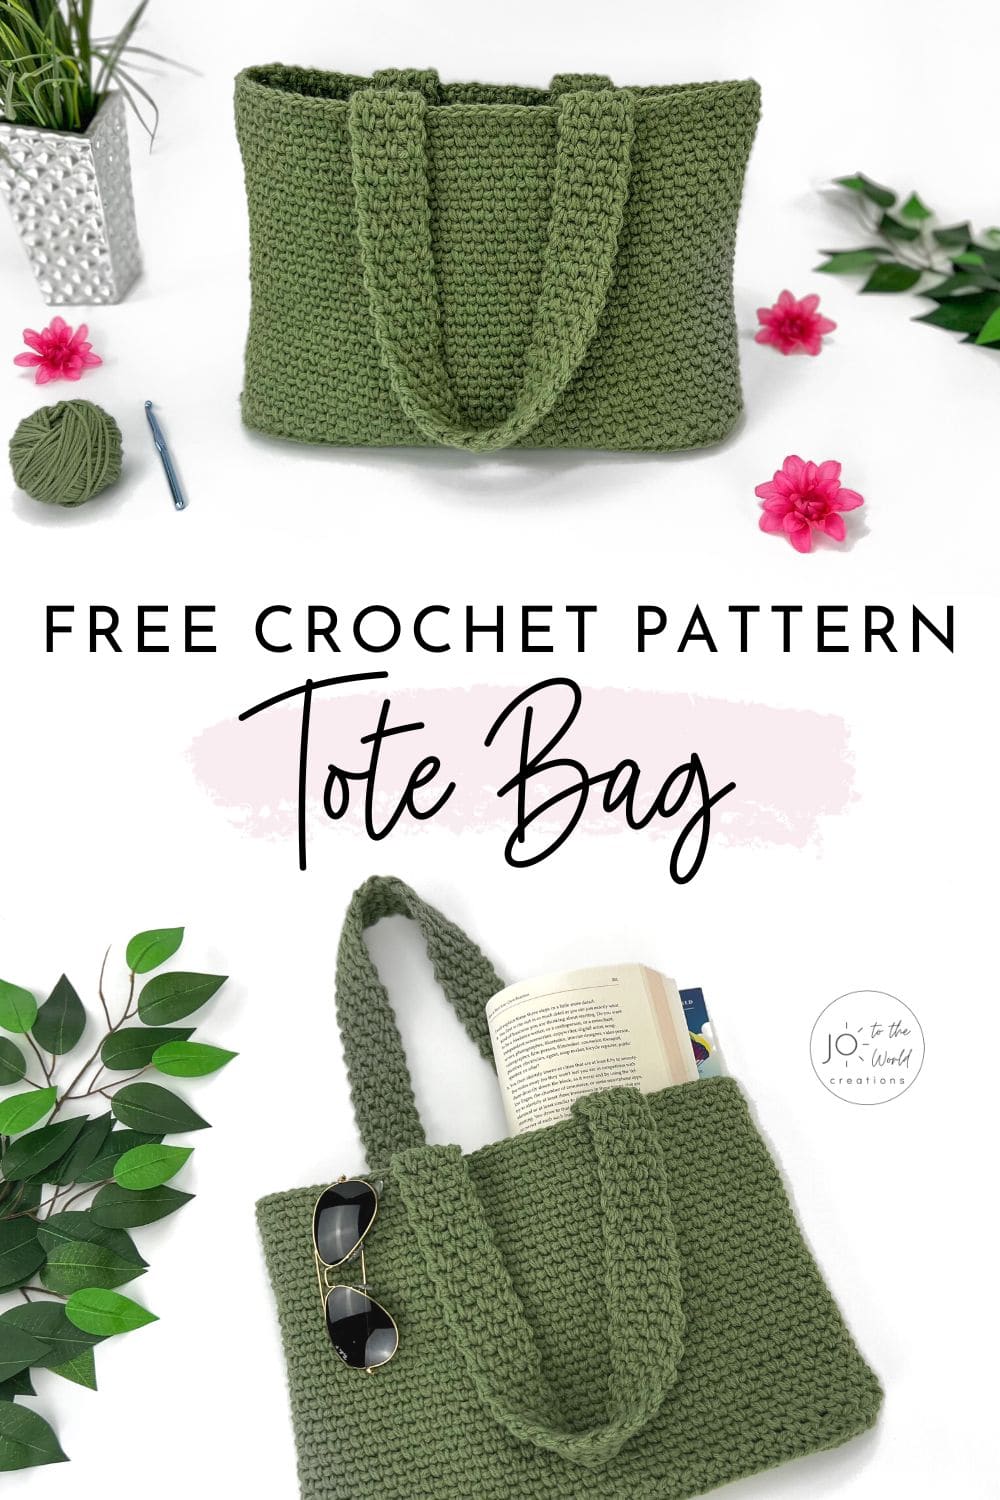 Crochet tote bag free pattern